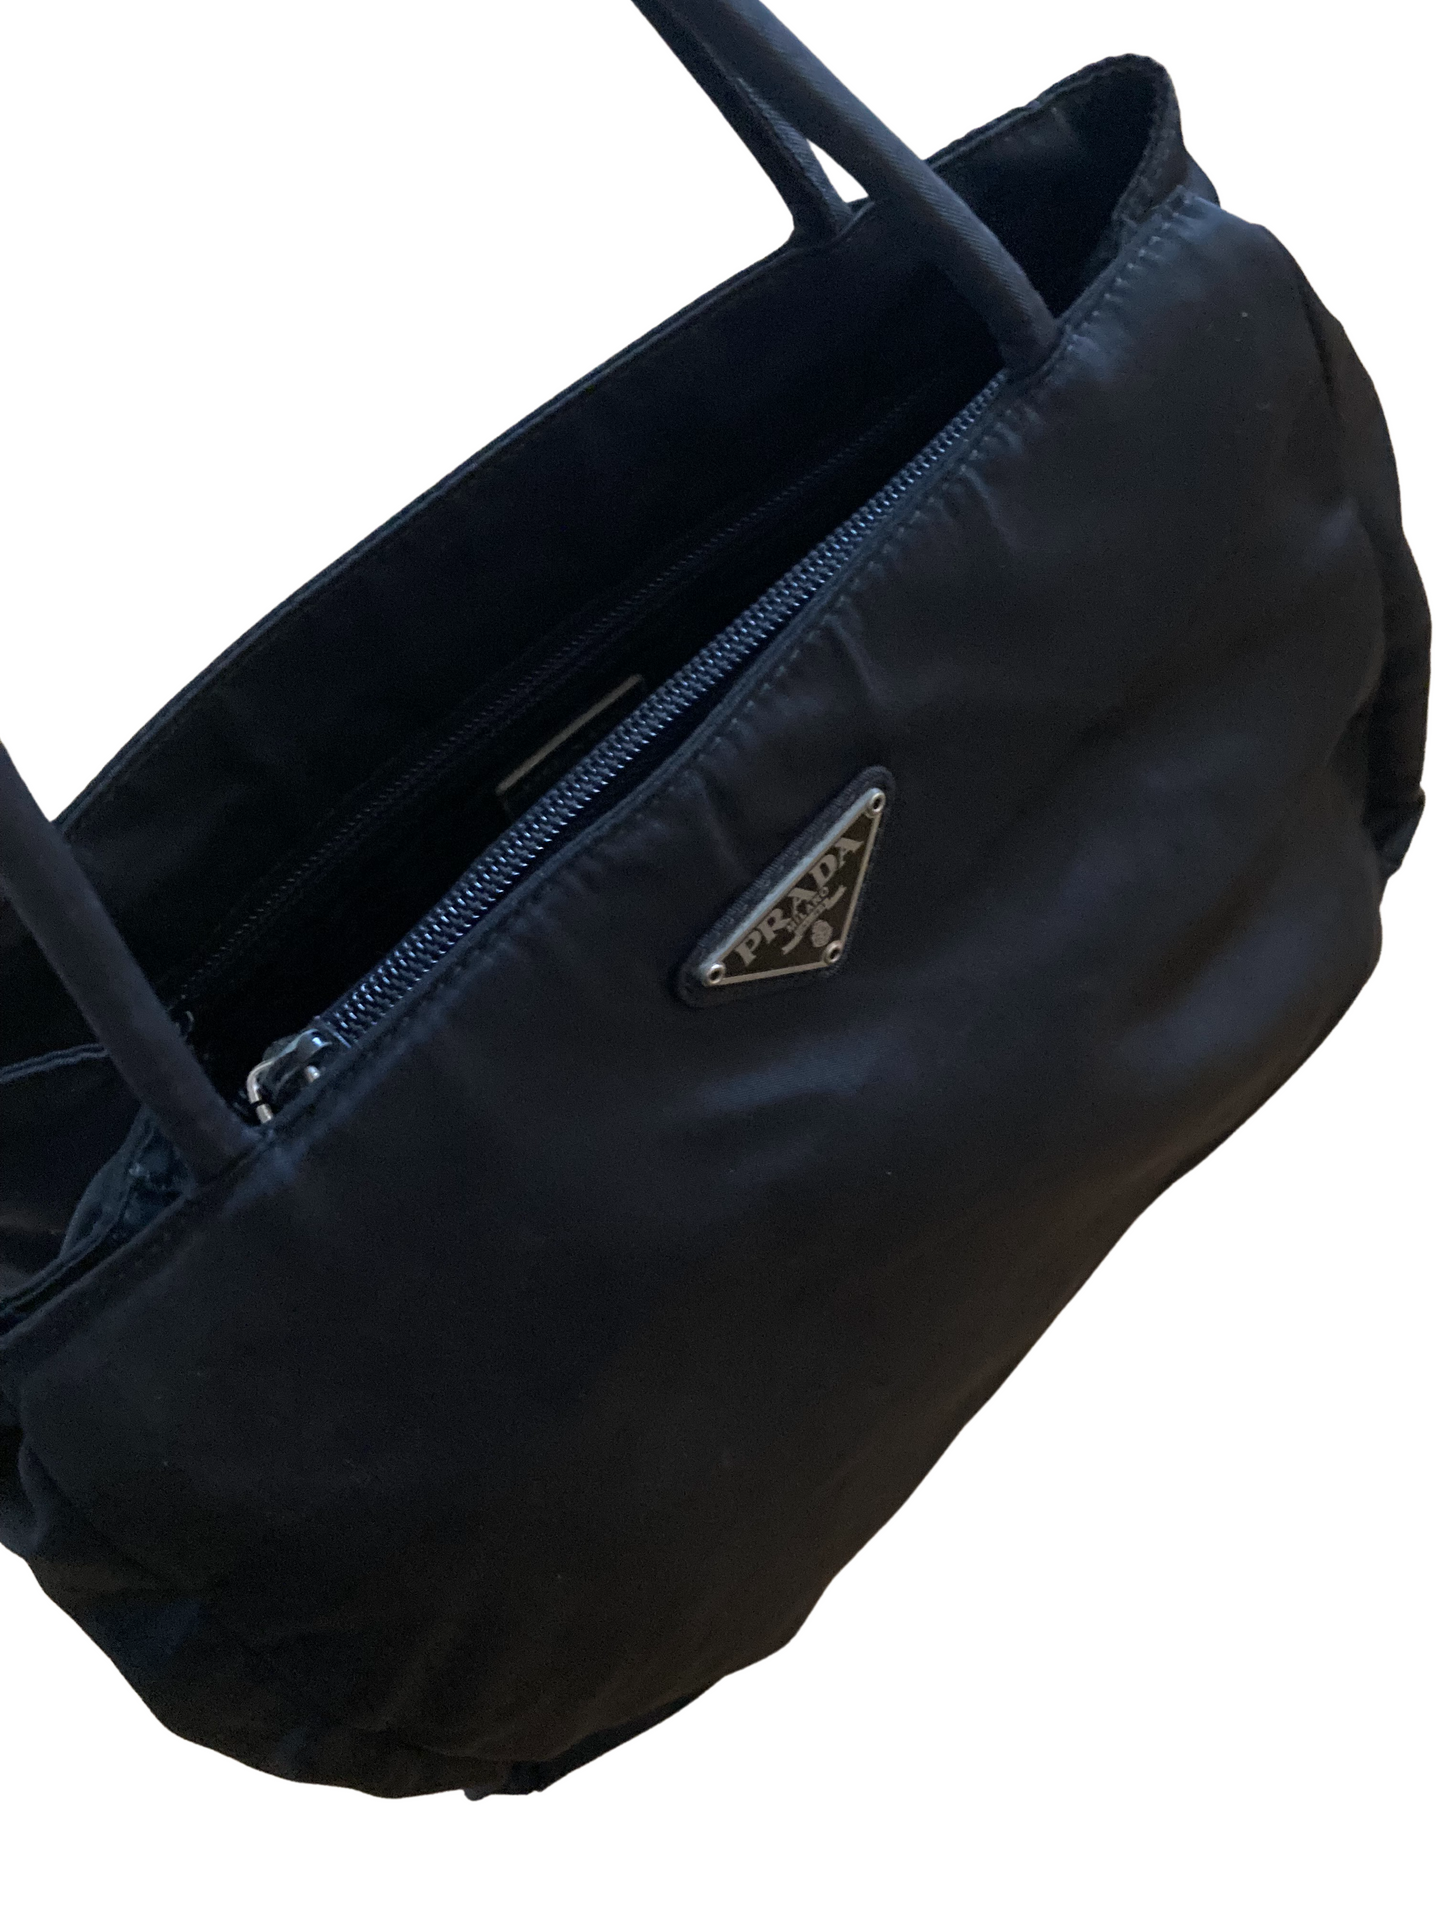 Prada Black Nylon Small Bag